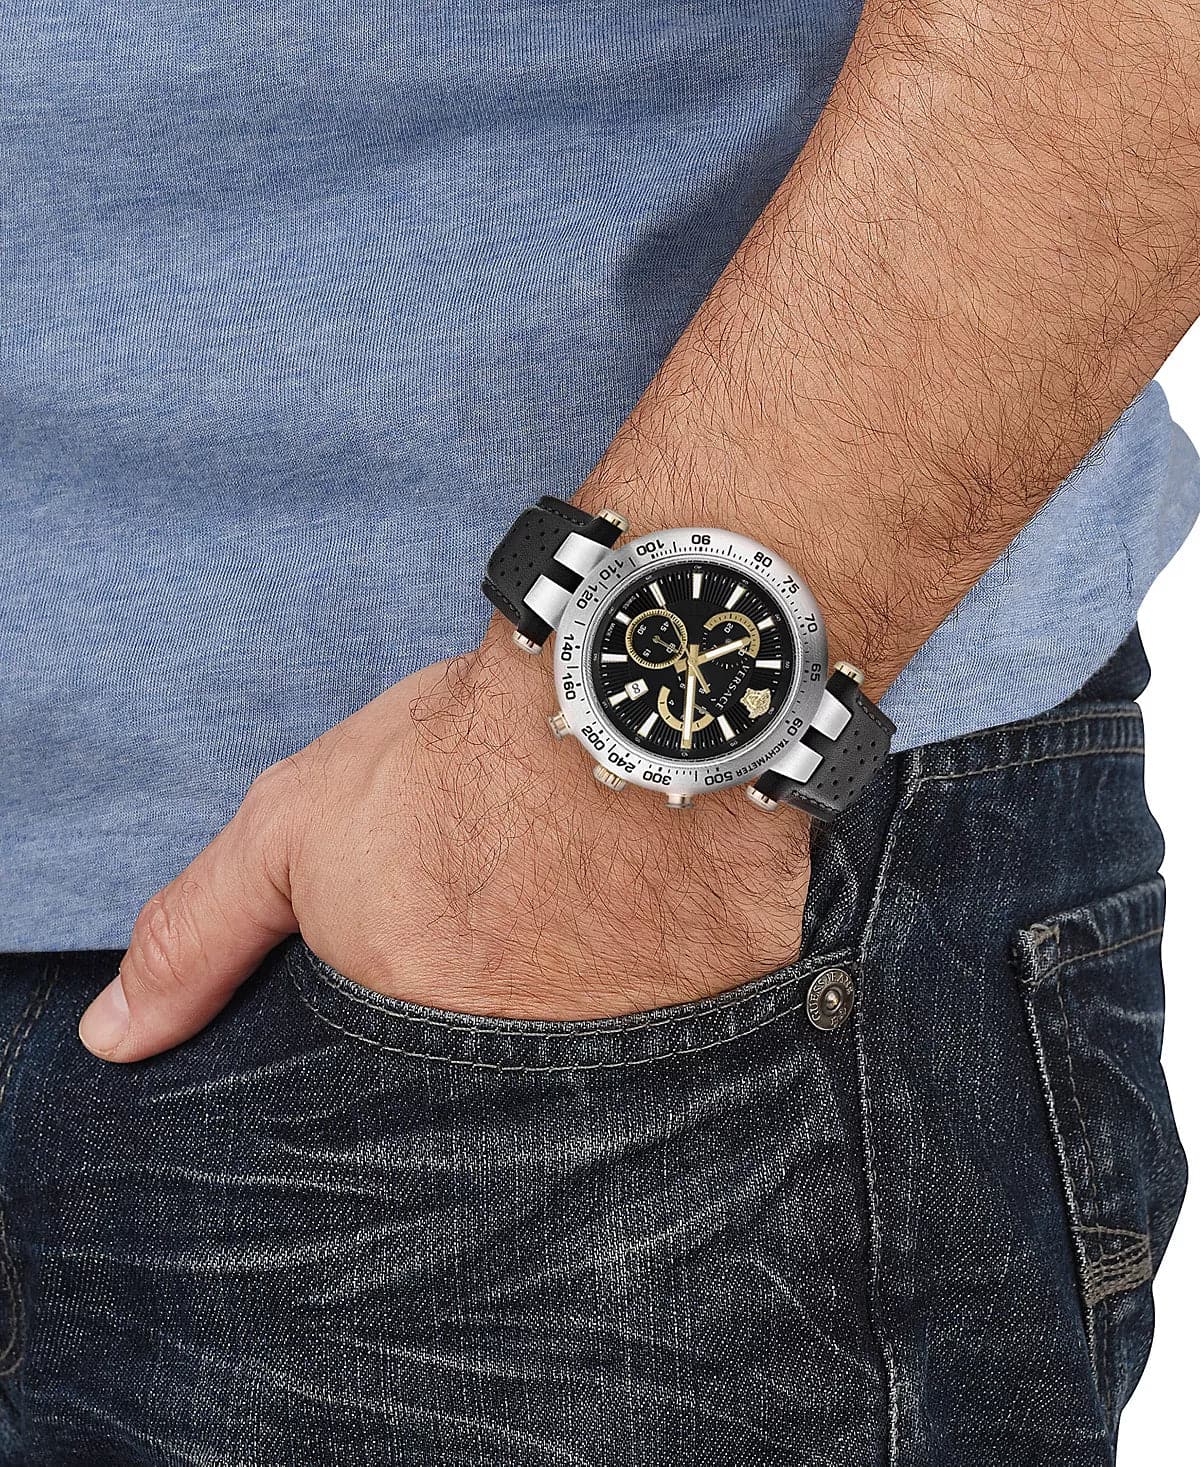 VERSACE Men's Swiss Chronograph Bold Black Perforated Leather Strap Watch VEJB00222 - Kamal Watch Company